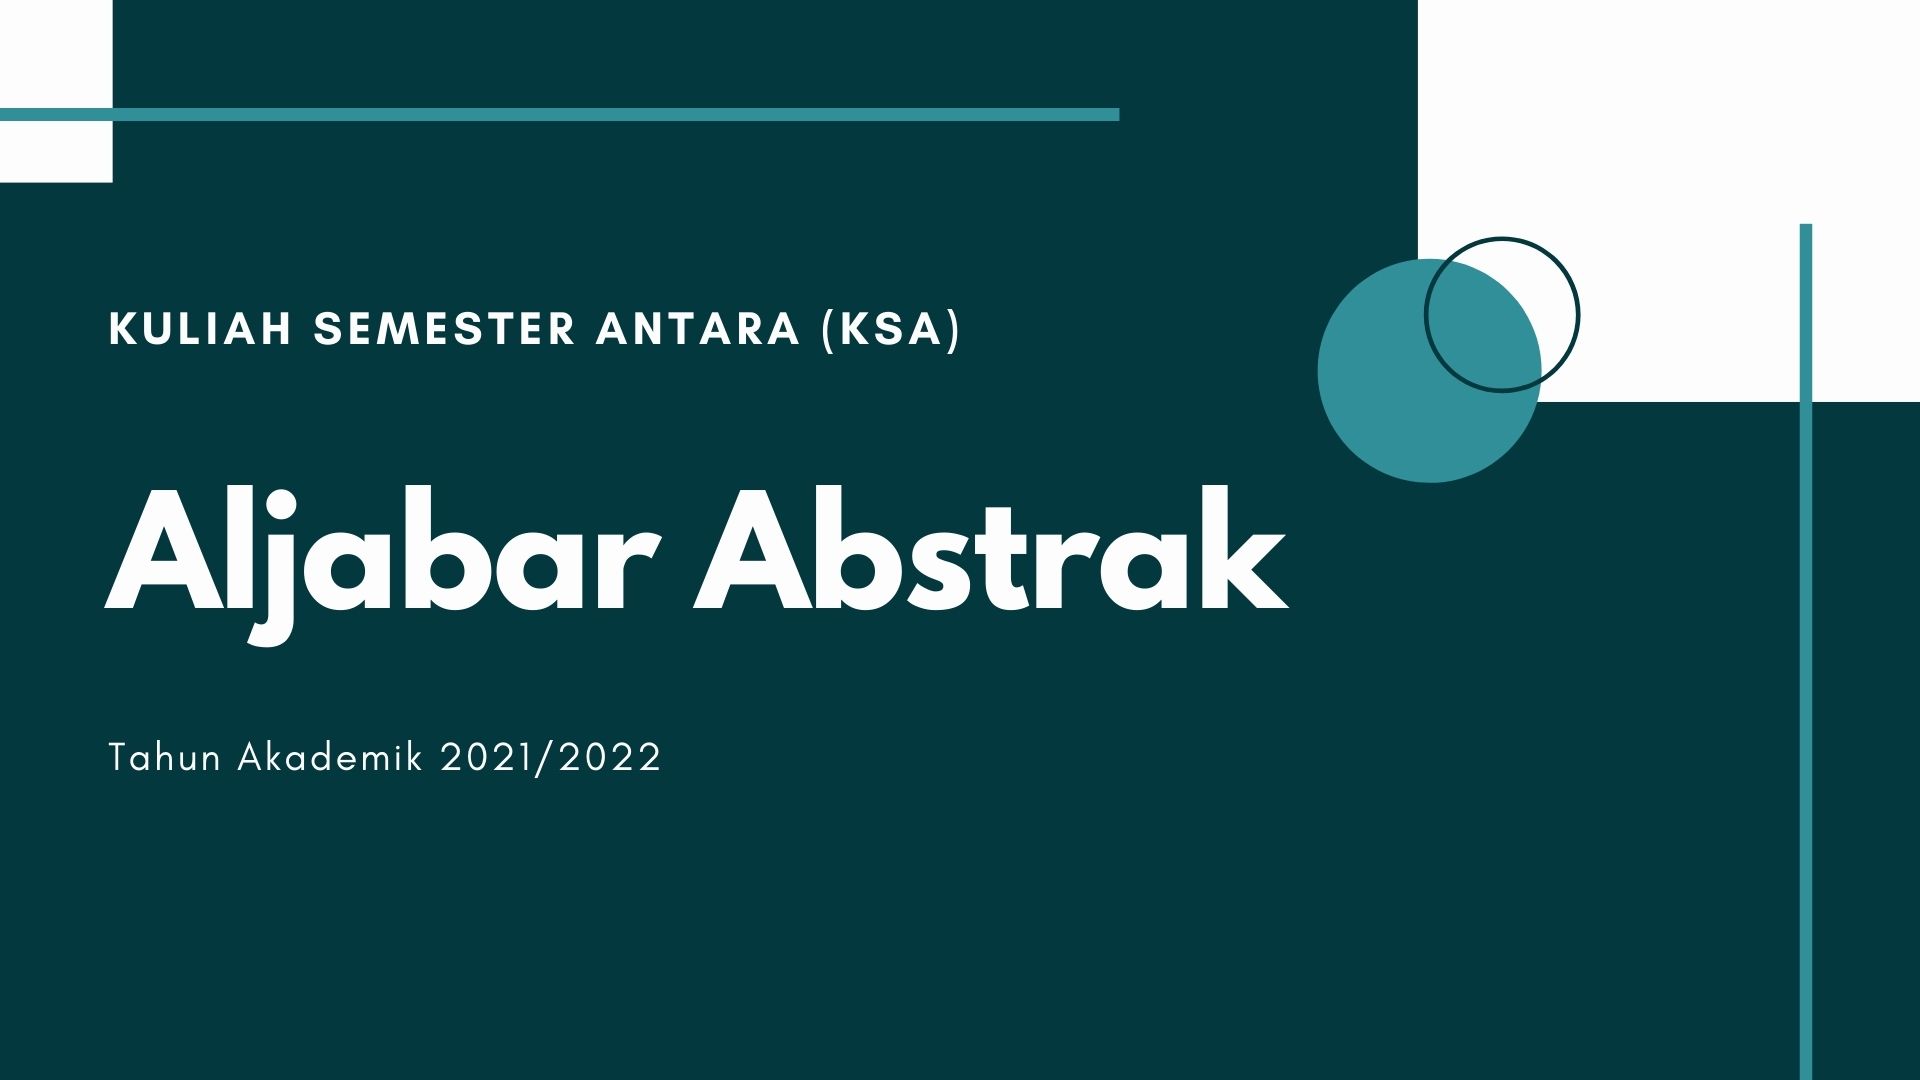 KSA Aljabar Abstrak TA 2021/2022